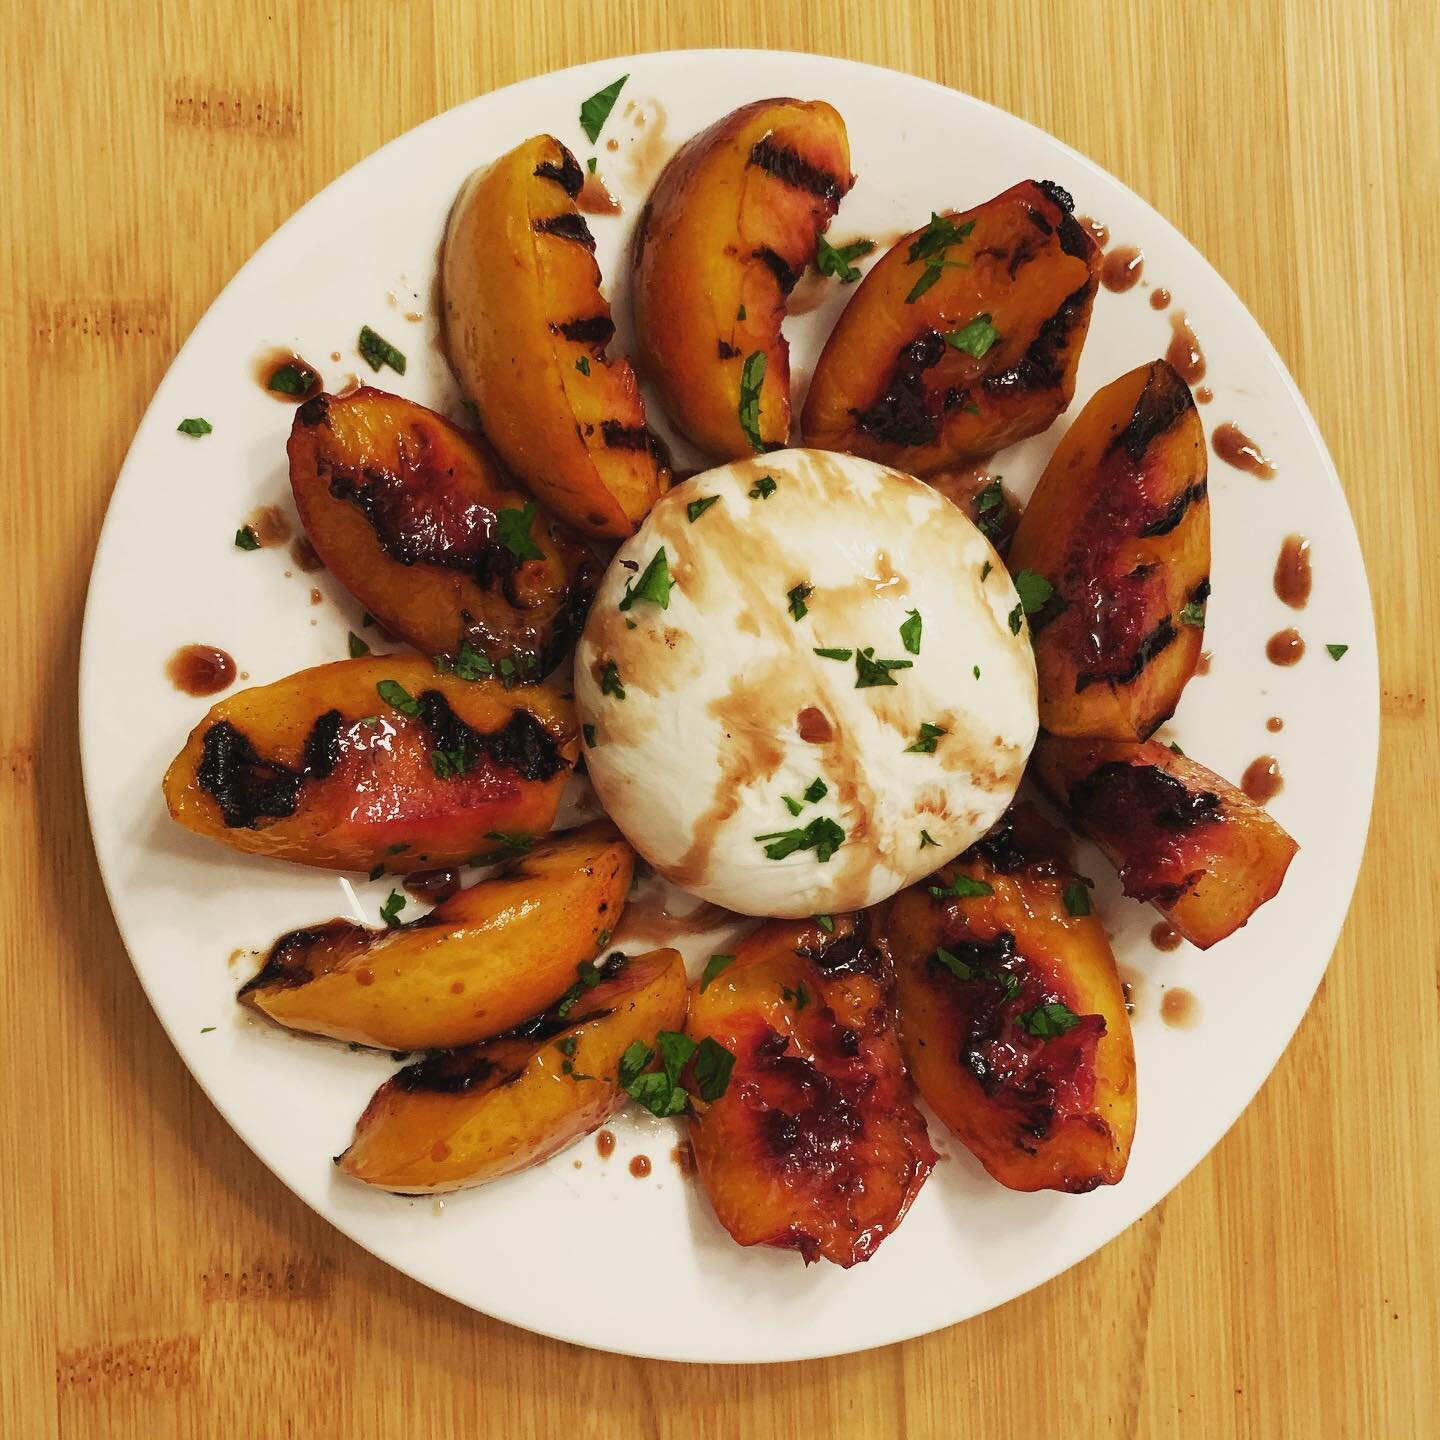 Grilled peaches 🍑 
Burrata 
Balsamic glaze 
#yum
#CookGoodFood